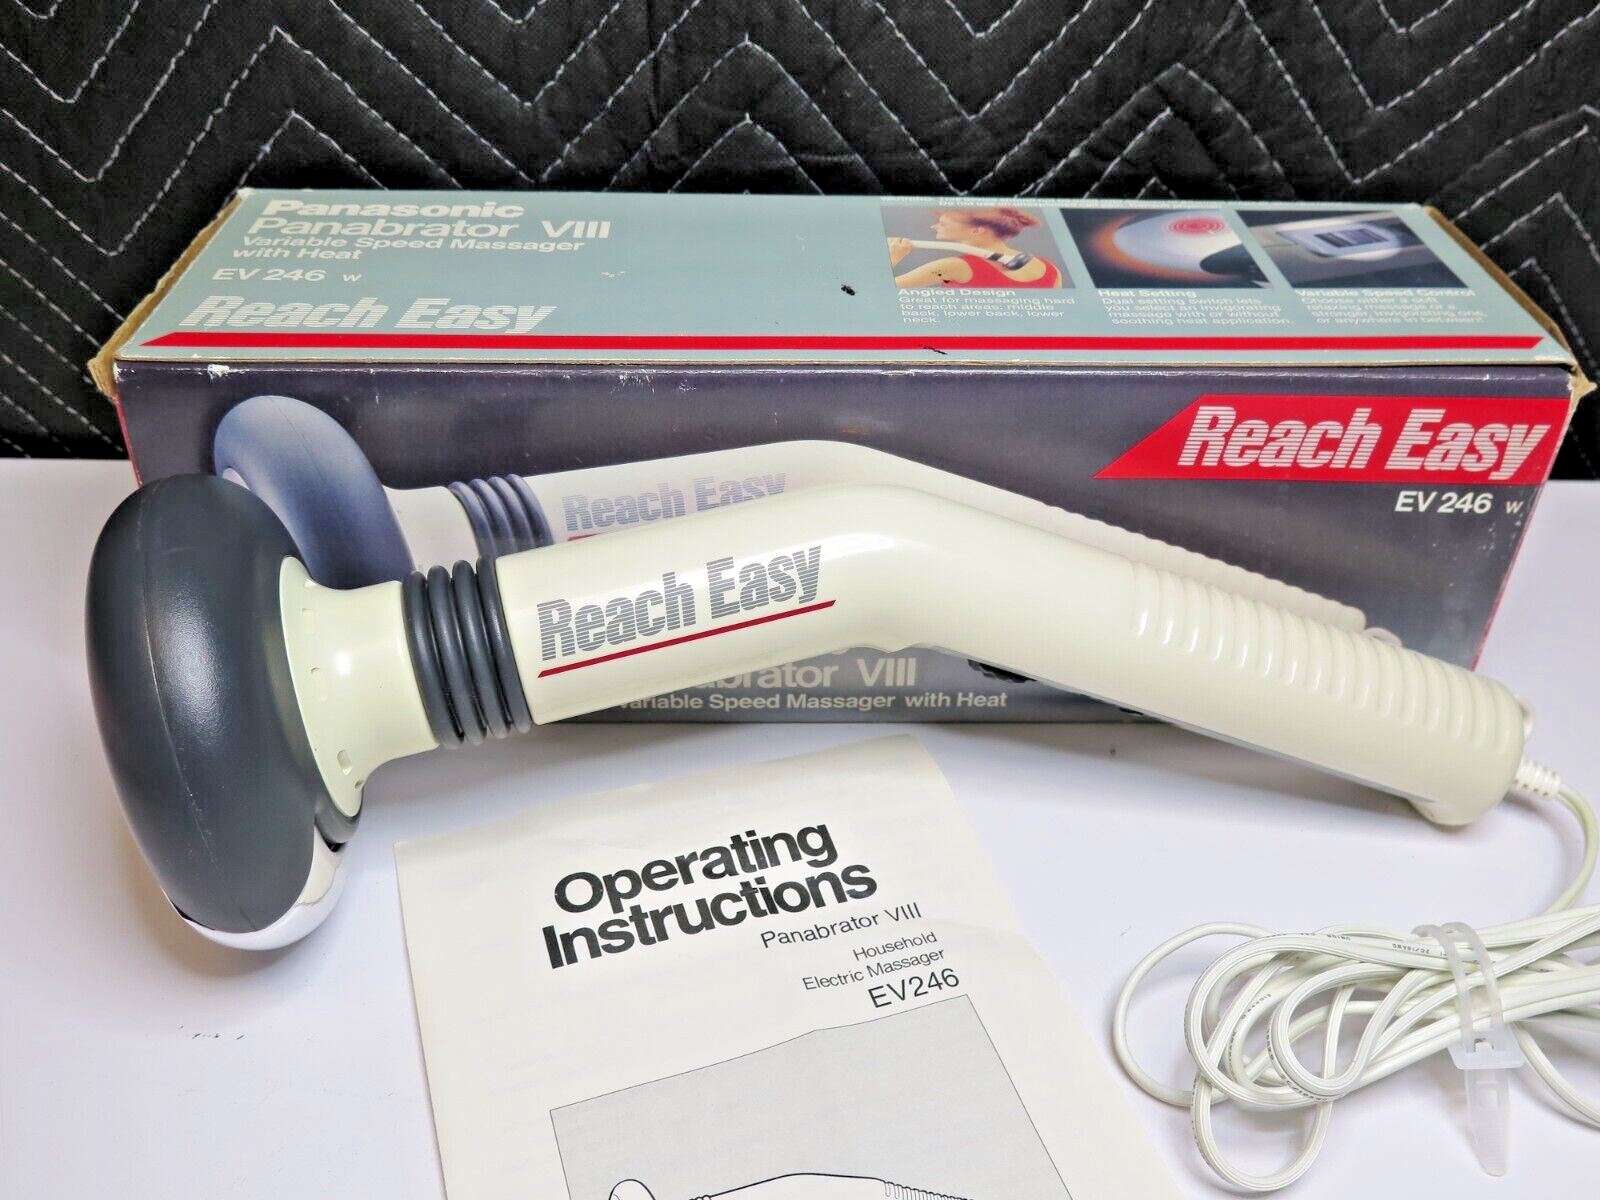 Panasonic REACH EASY Cordless Massager EV241 Handheld 2 Speed Panabrator XII